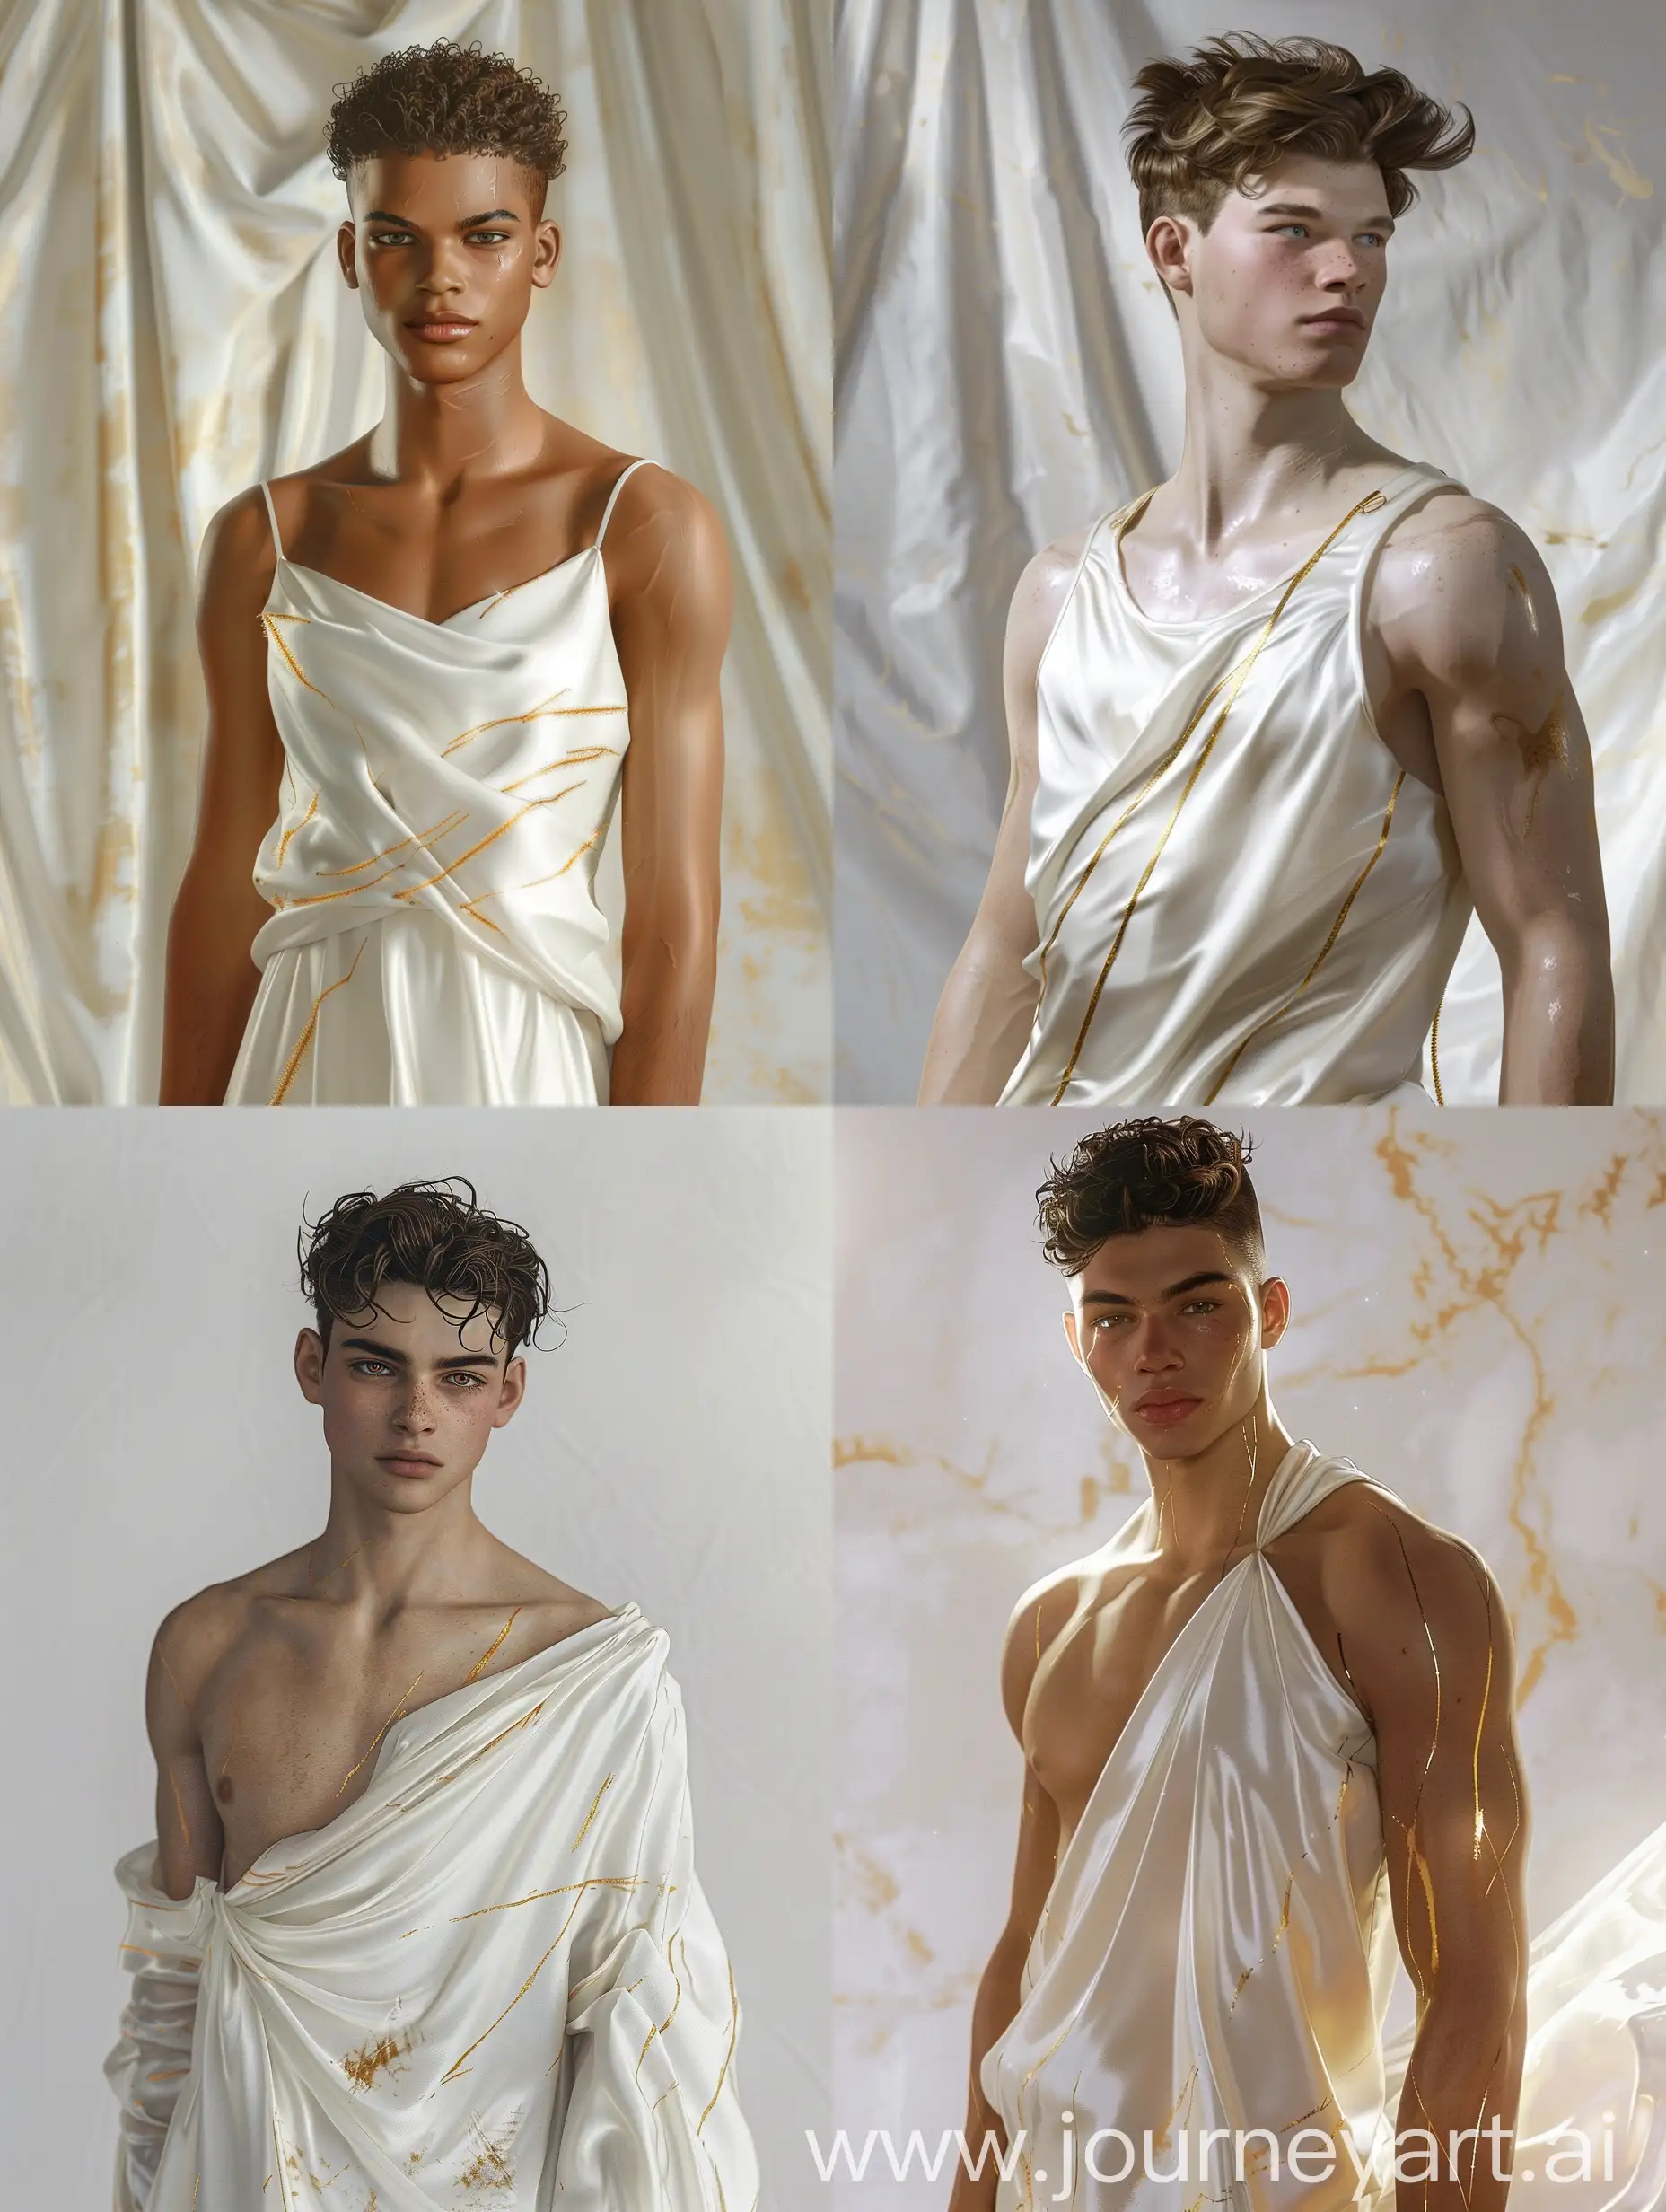 Cyberpunk-Fashion-Handsome-17YearOld-in-White-Silk-Dress-with-Gold-Streaks